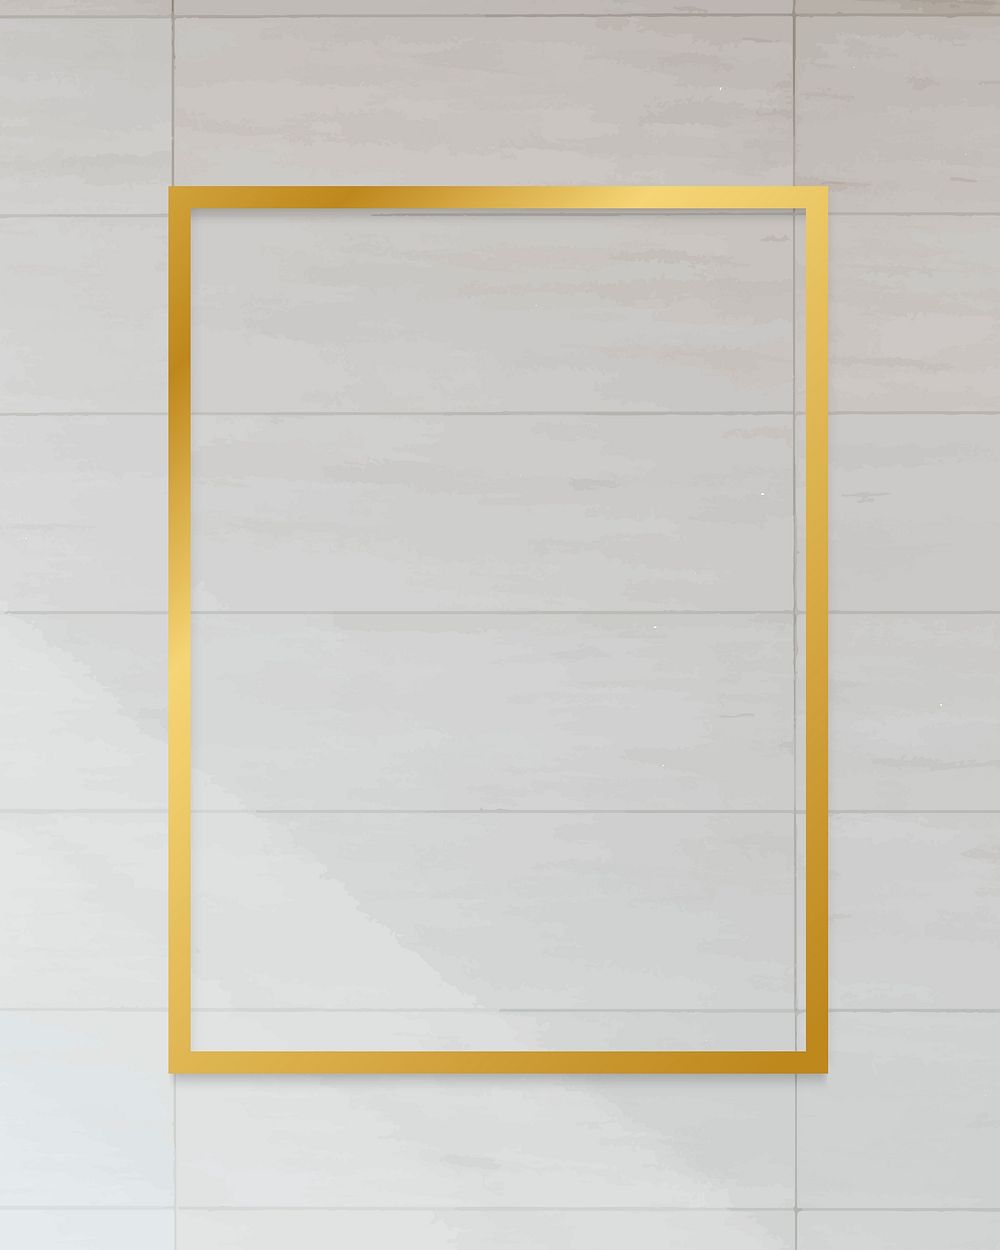 Golden framed rectangle on a tile textured vector